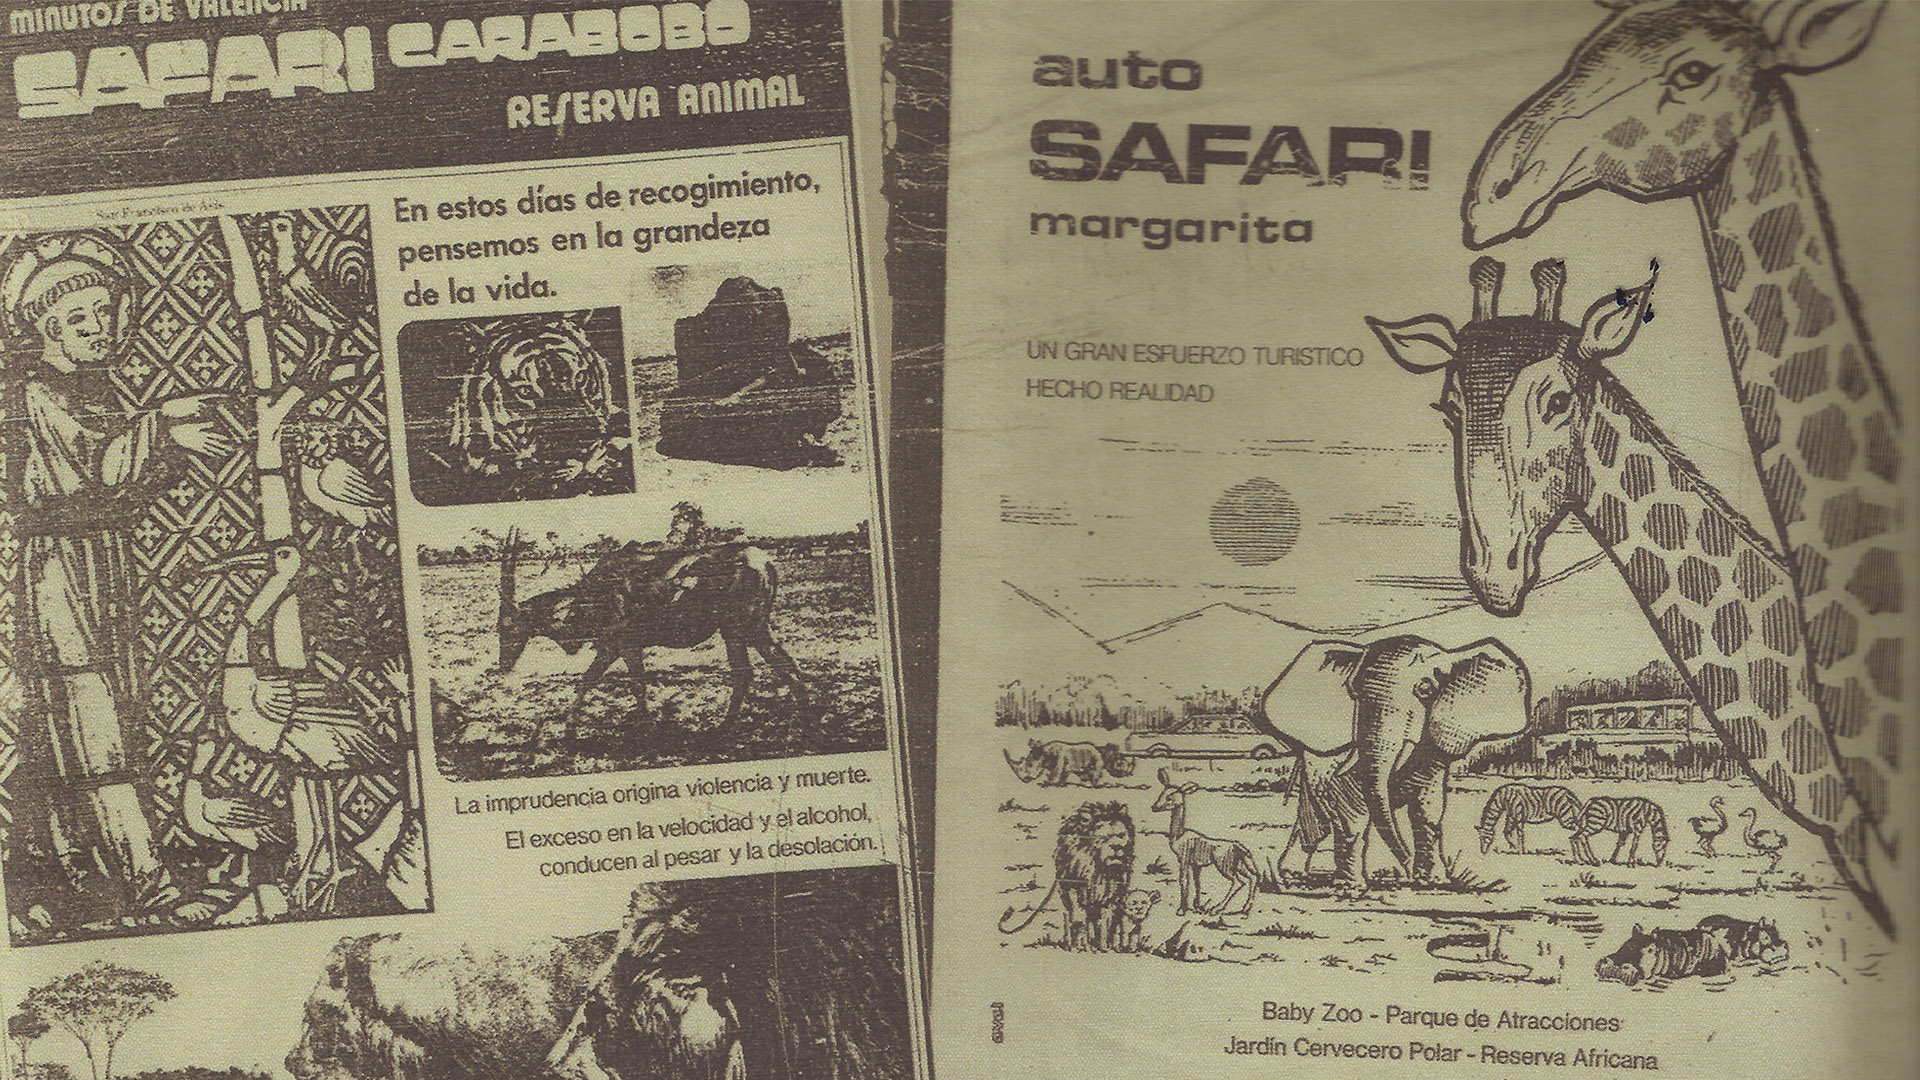 safari carabobo venezuela